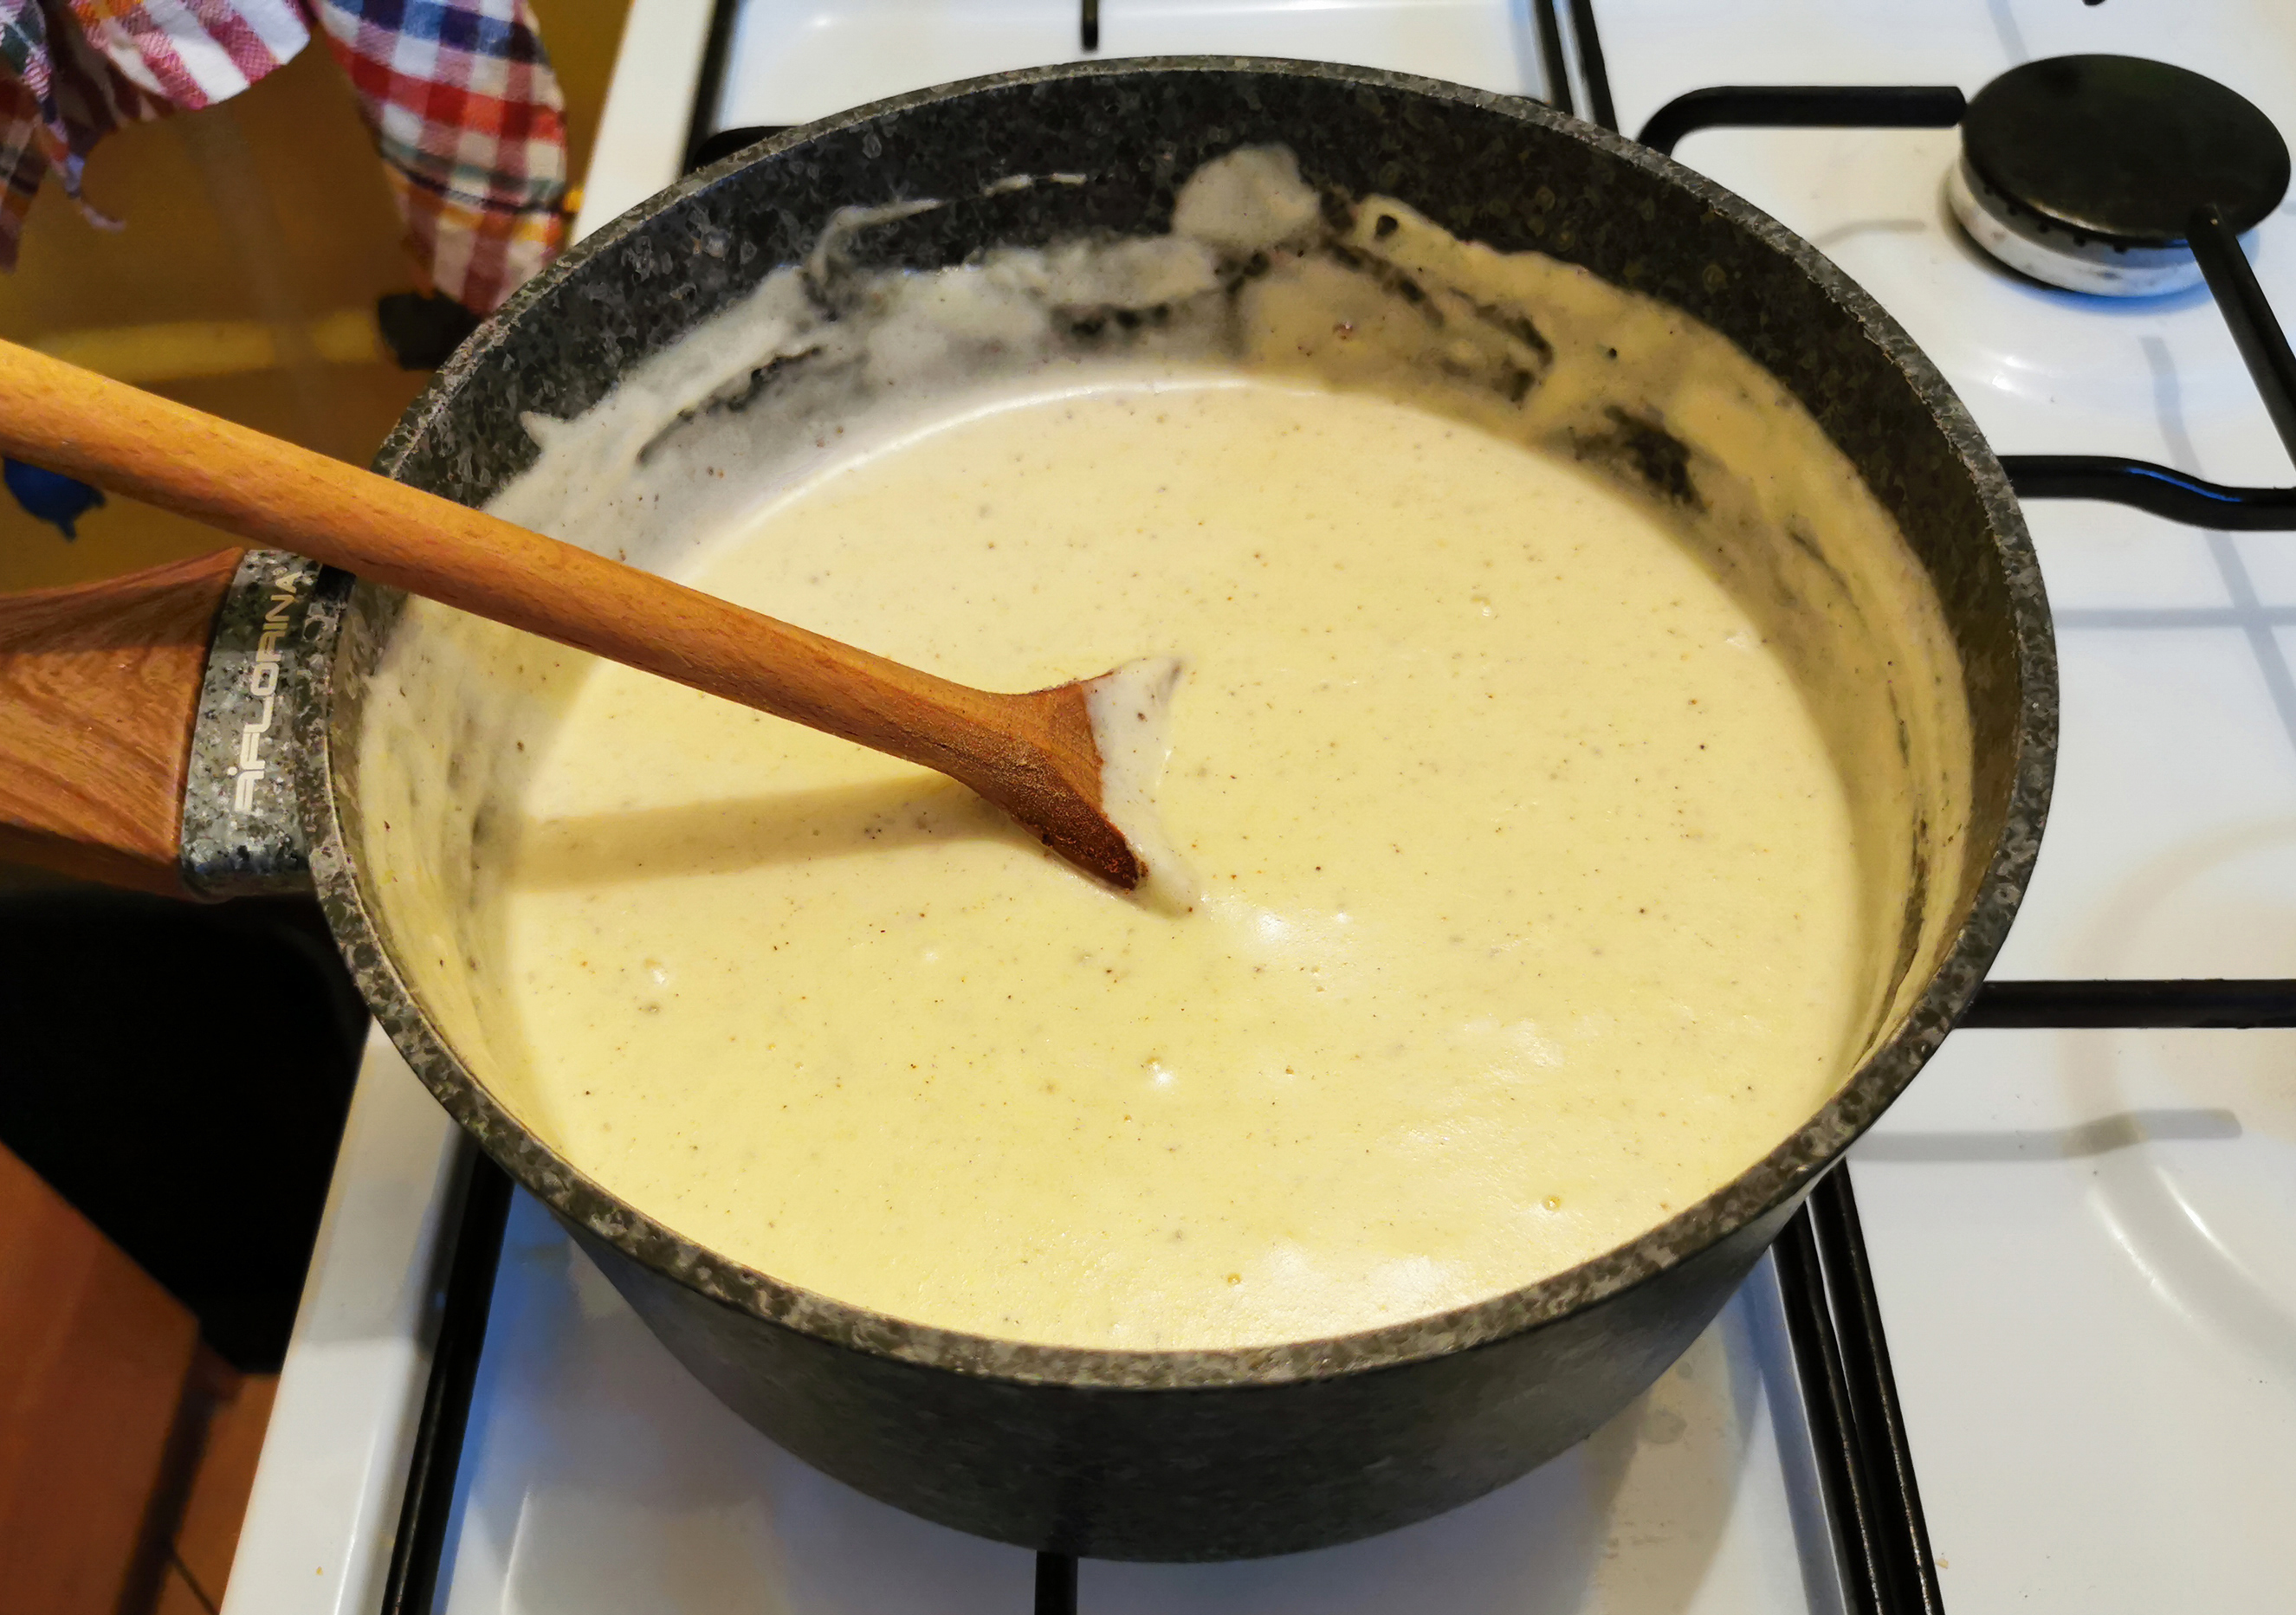 Pot of béchamel sauce being finished